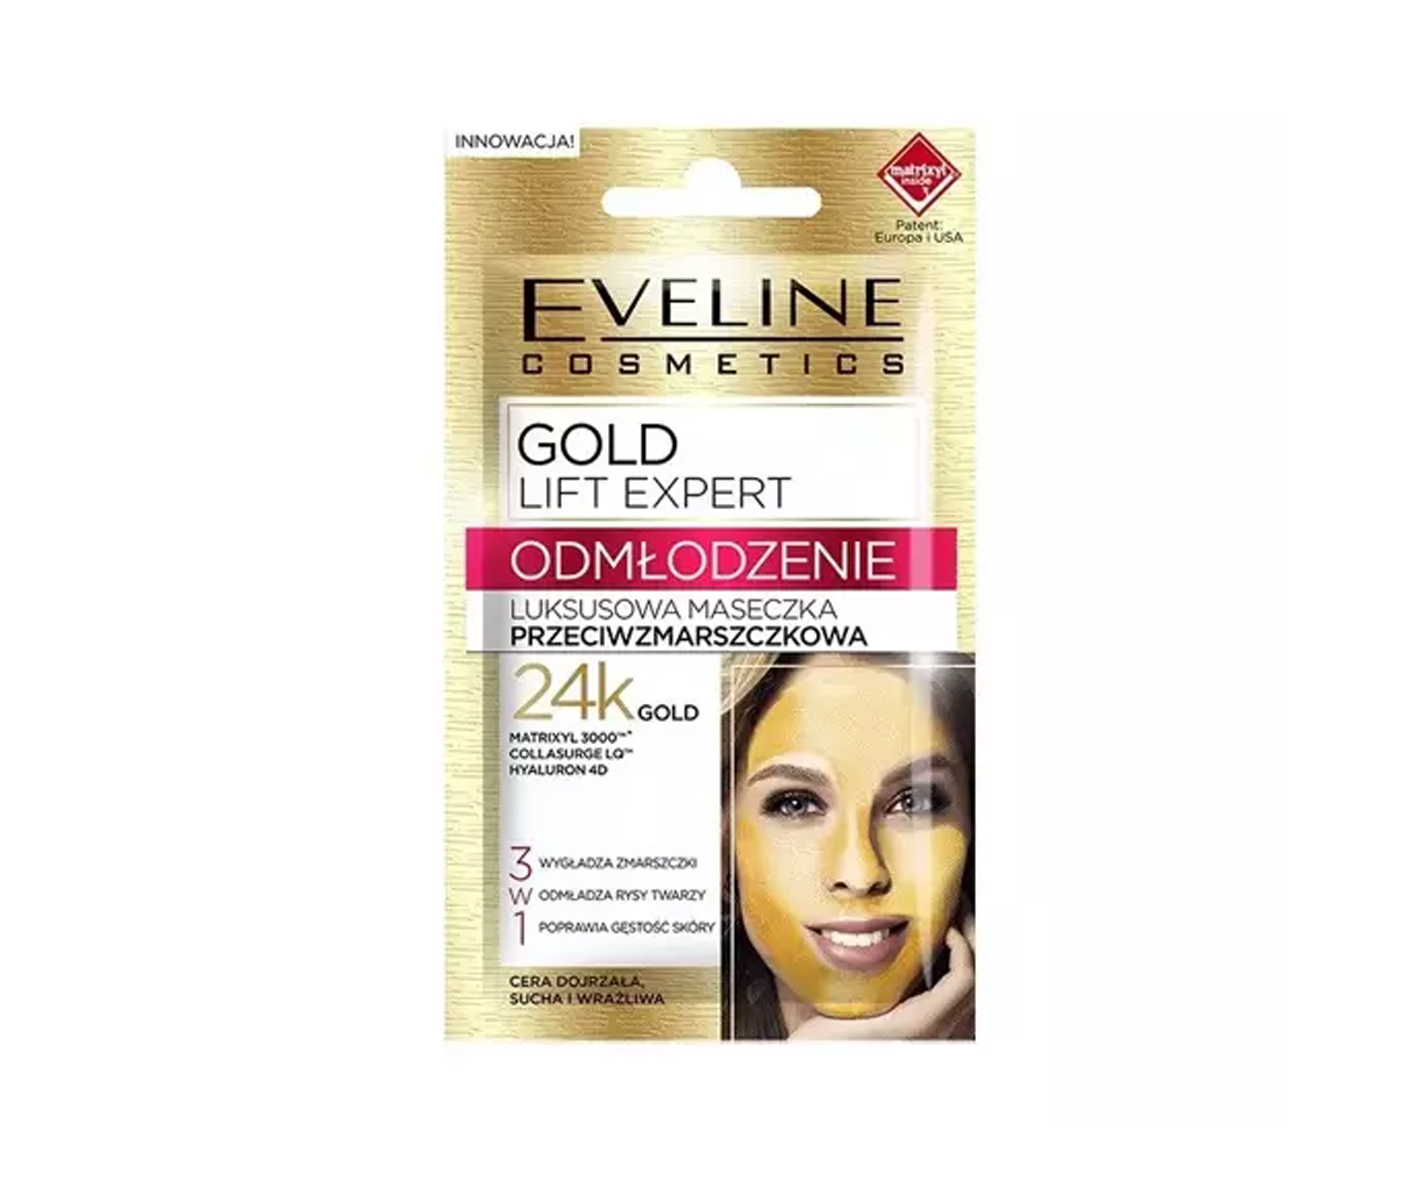 Eveline Cosmetics, Gold Lift Expert, anti-wrinkle mask